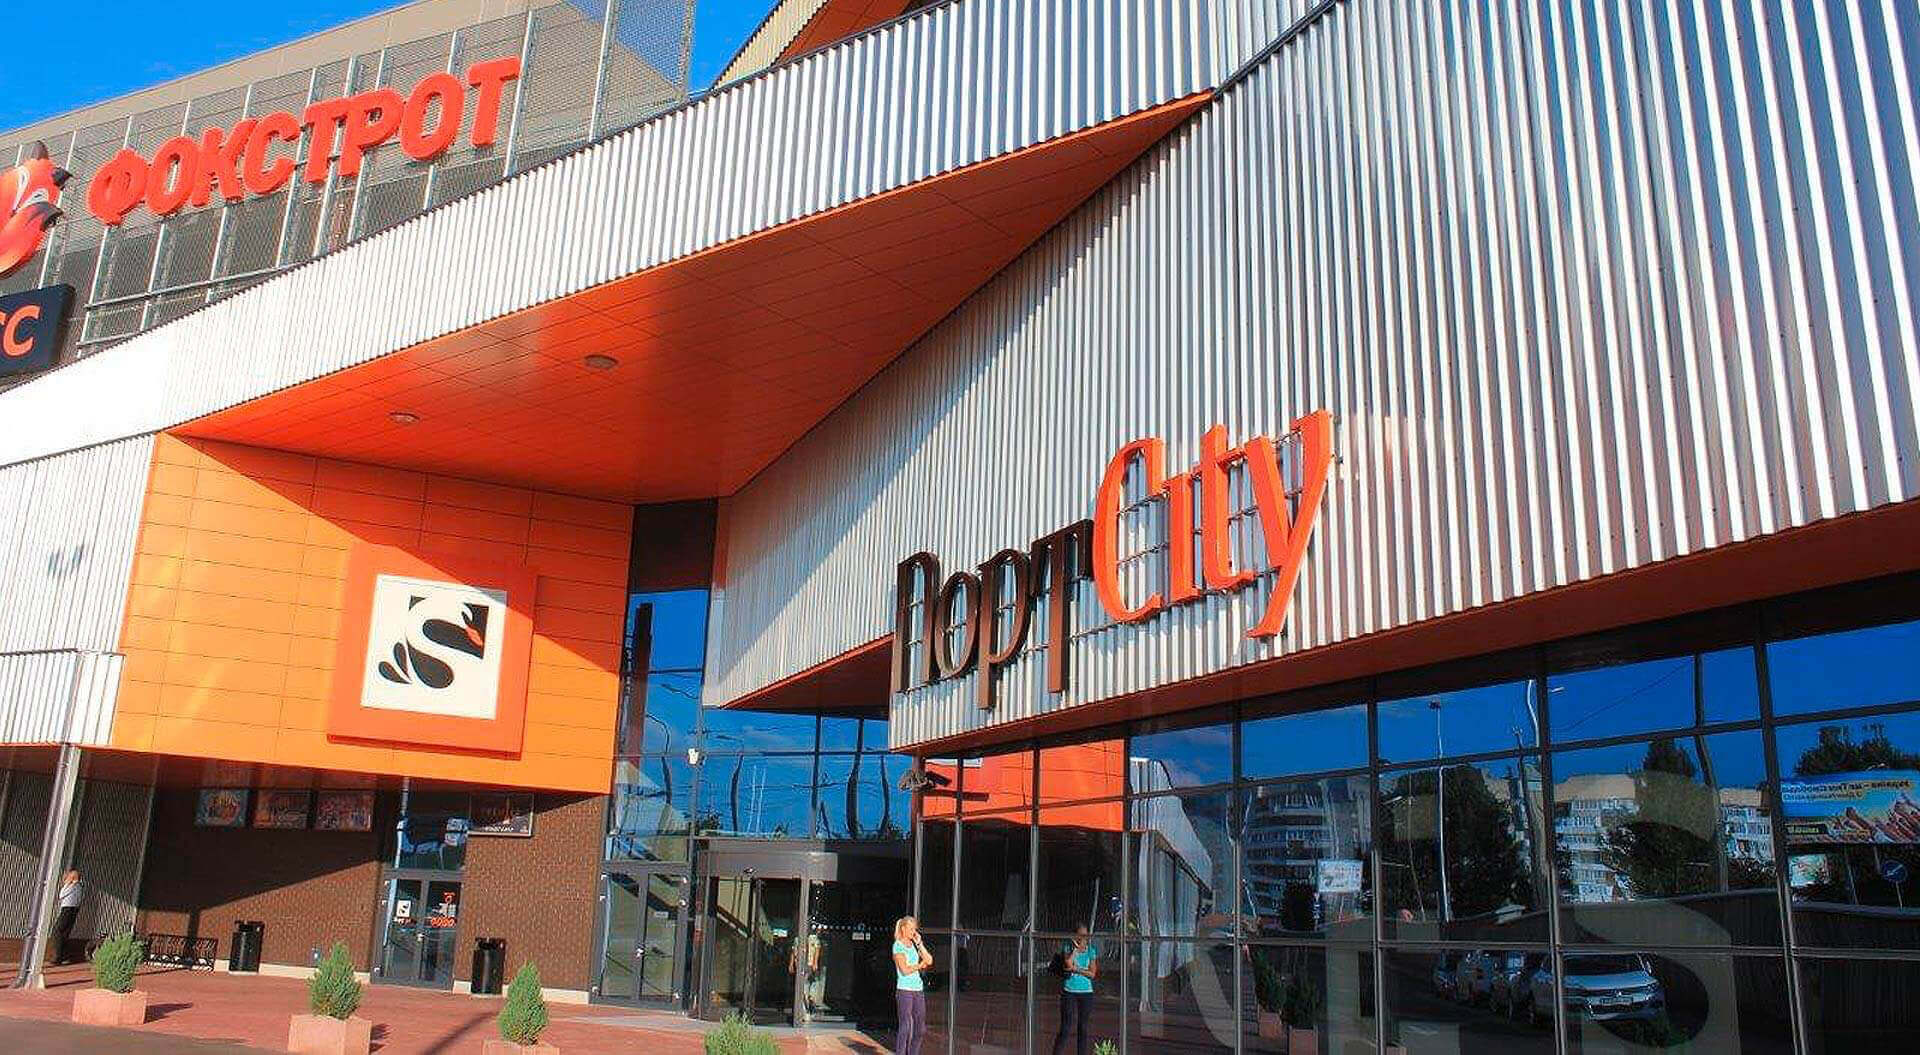 Port City Shopping Mall entrance and branding to the Lutsk Mall Ukraine